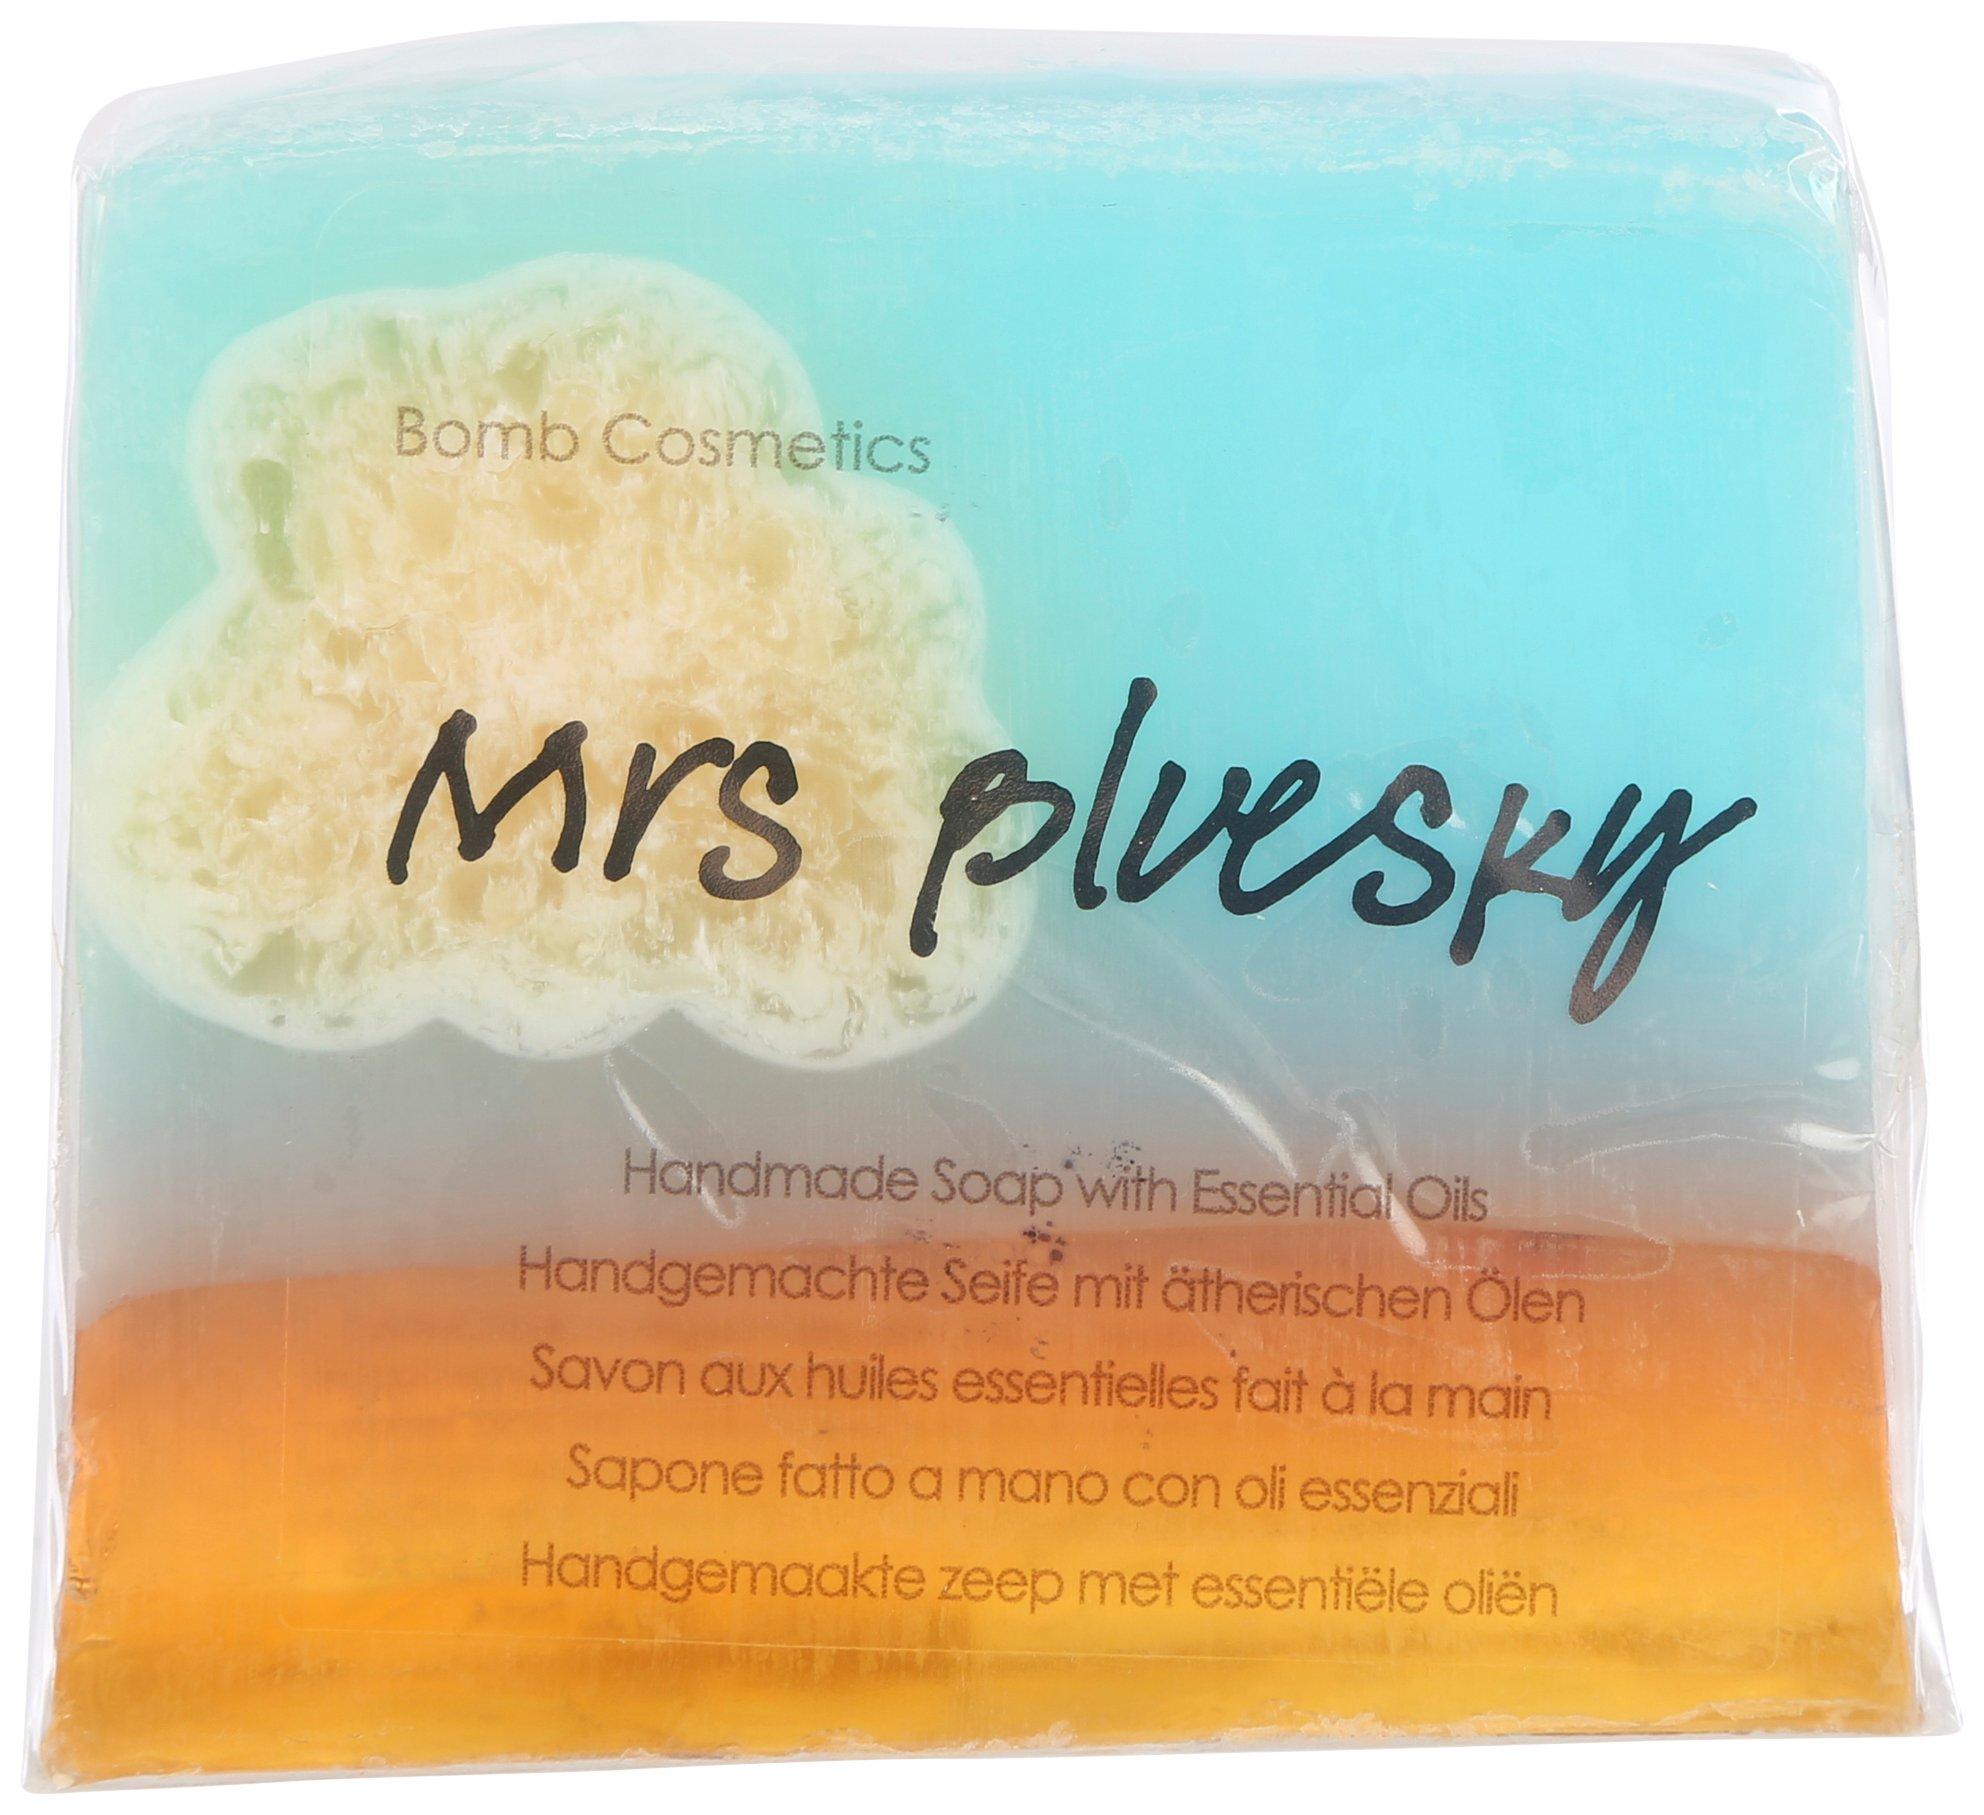 Bomb Cosmetics Mrs Bluesky Handmade Soap 3.5 oz.